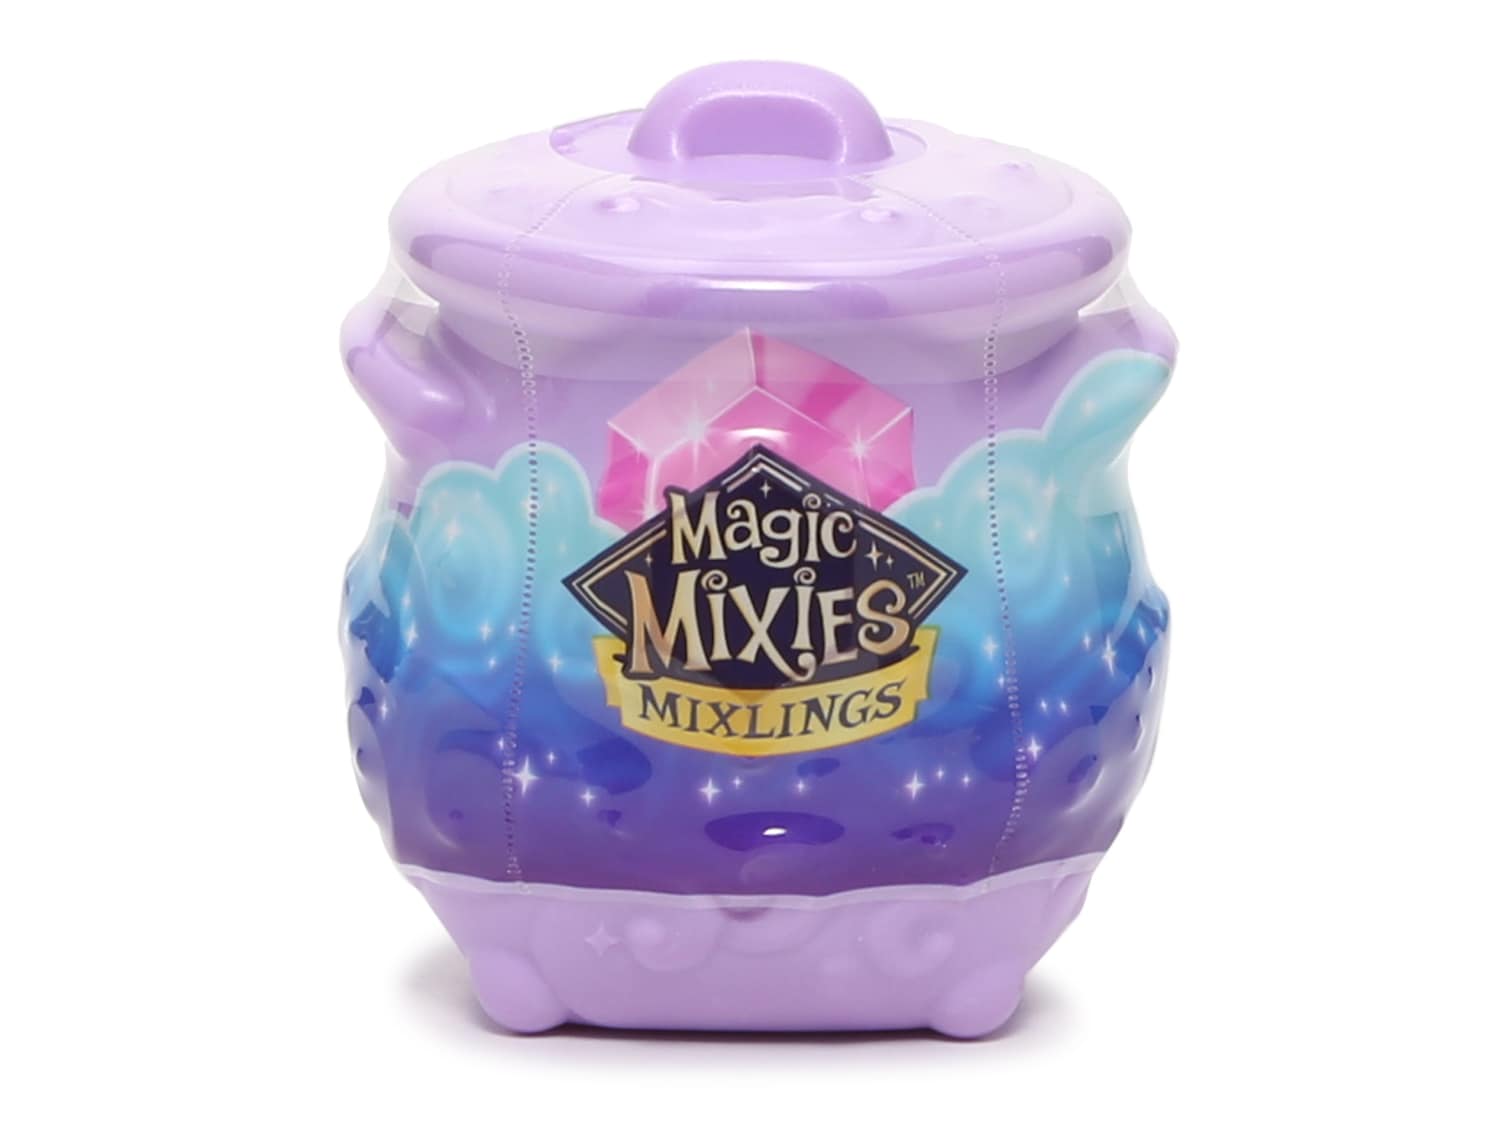 Magic Mixies Mixlings Collector's Cauldron — Learning Express Gifts